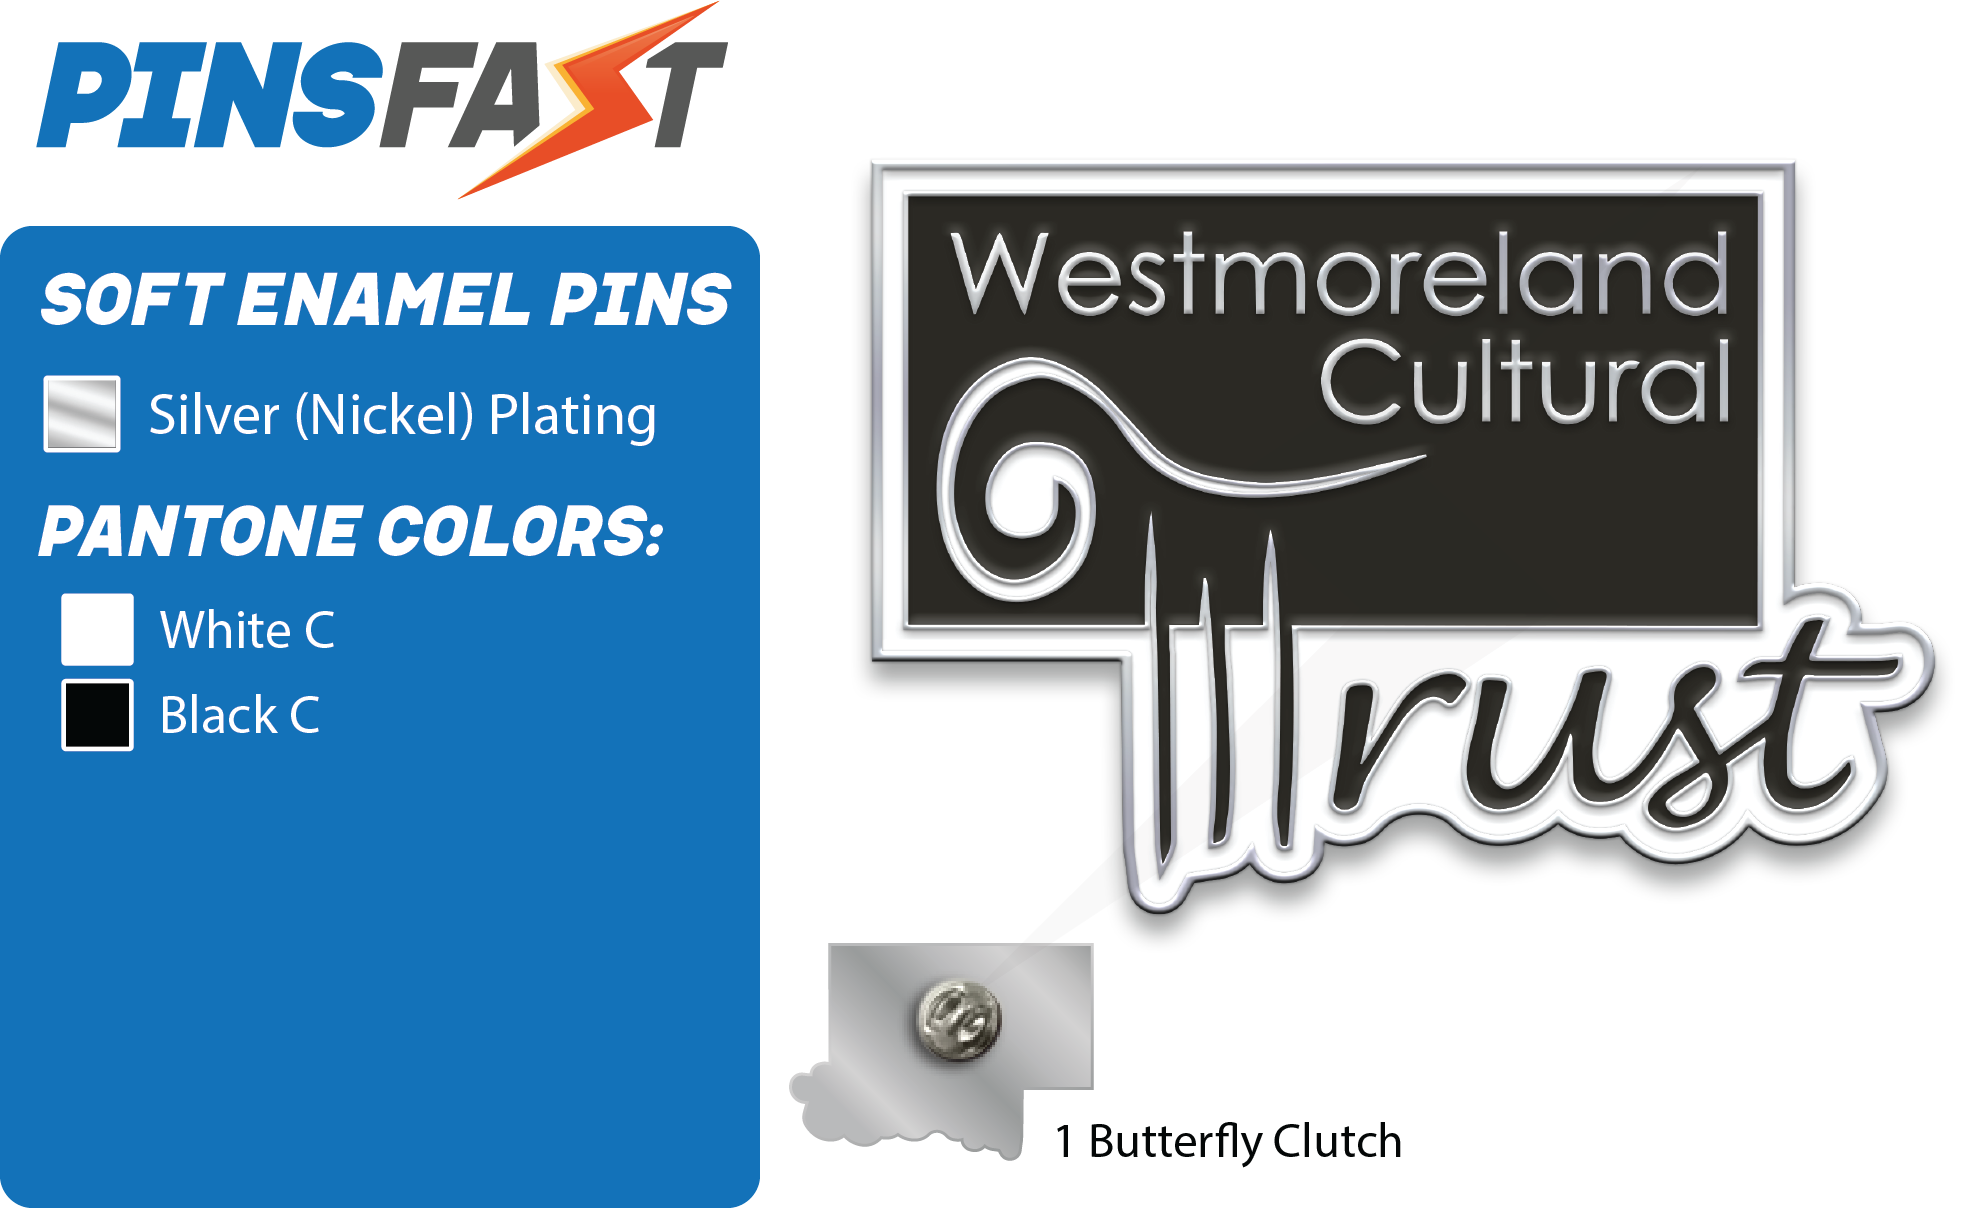 Westmoreland Trust Pins